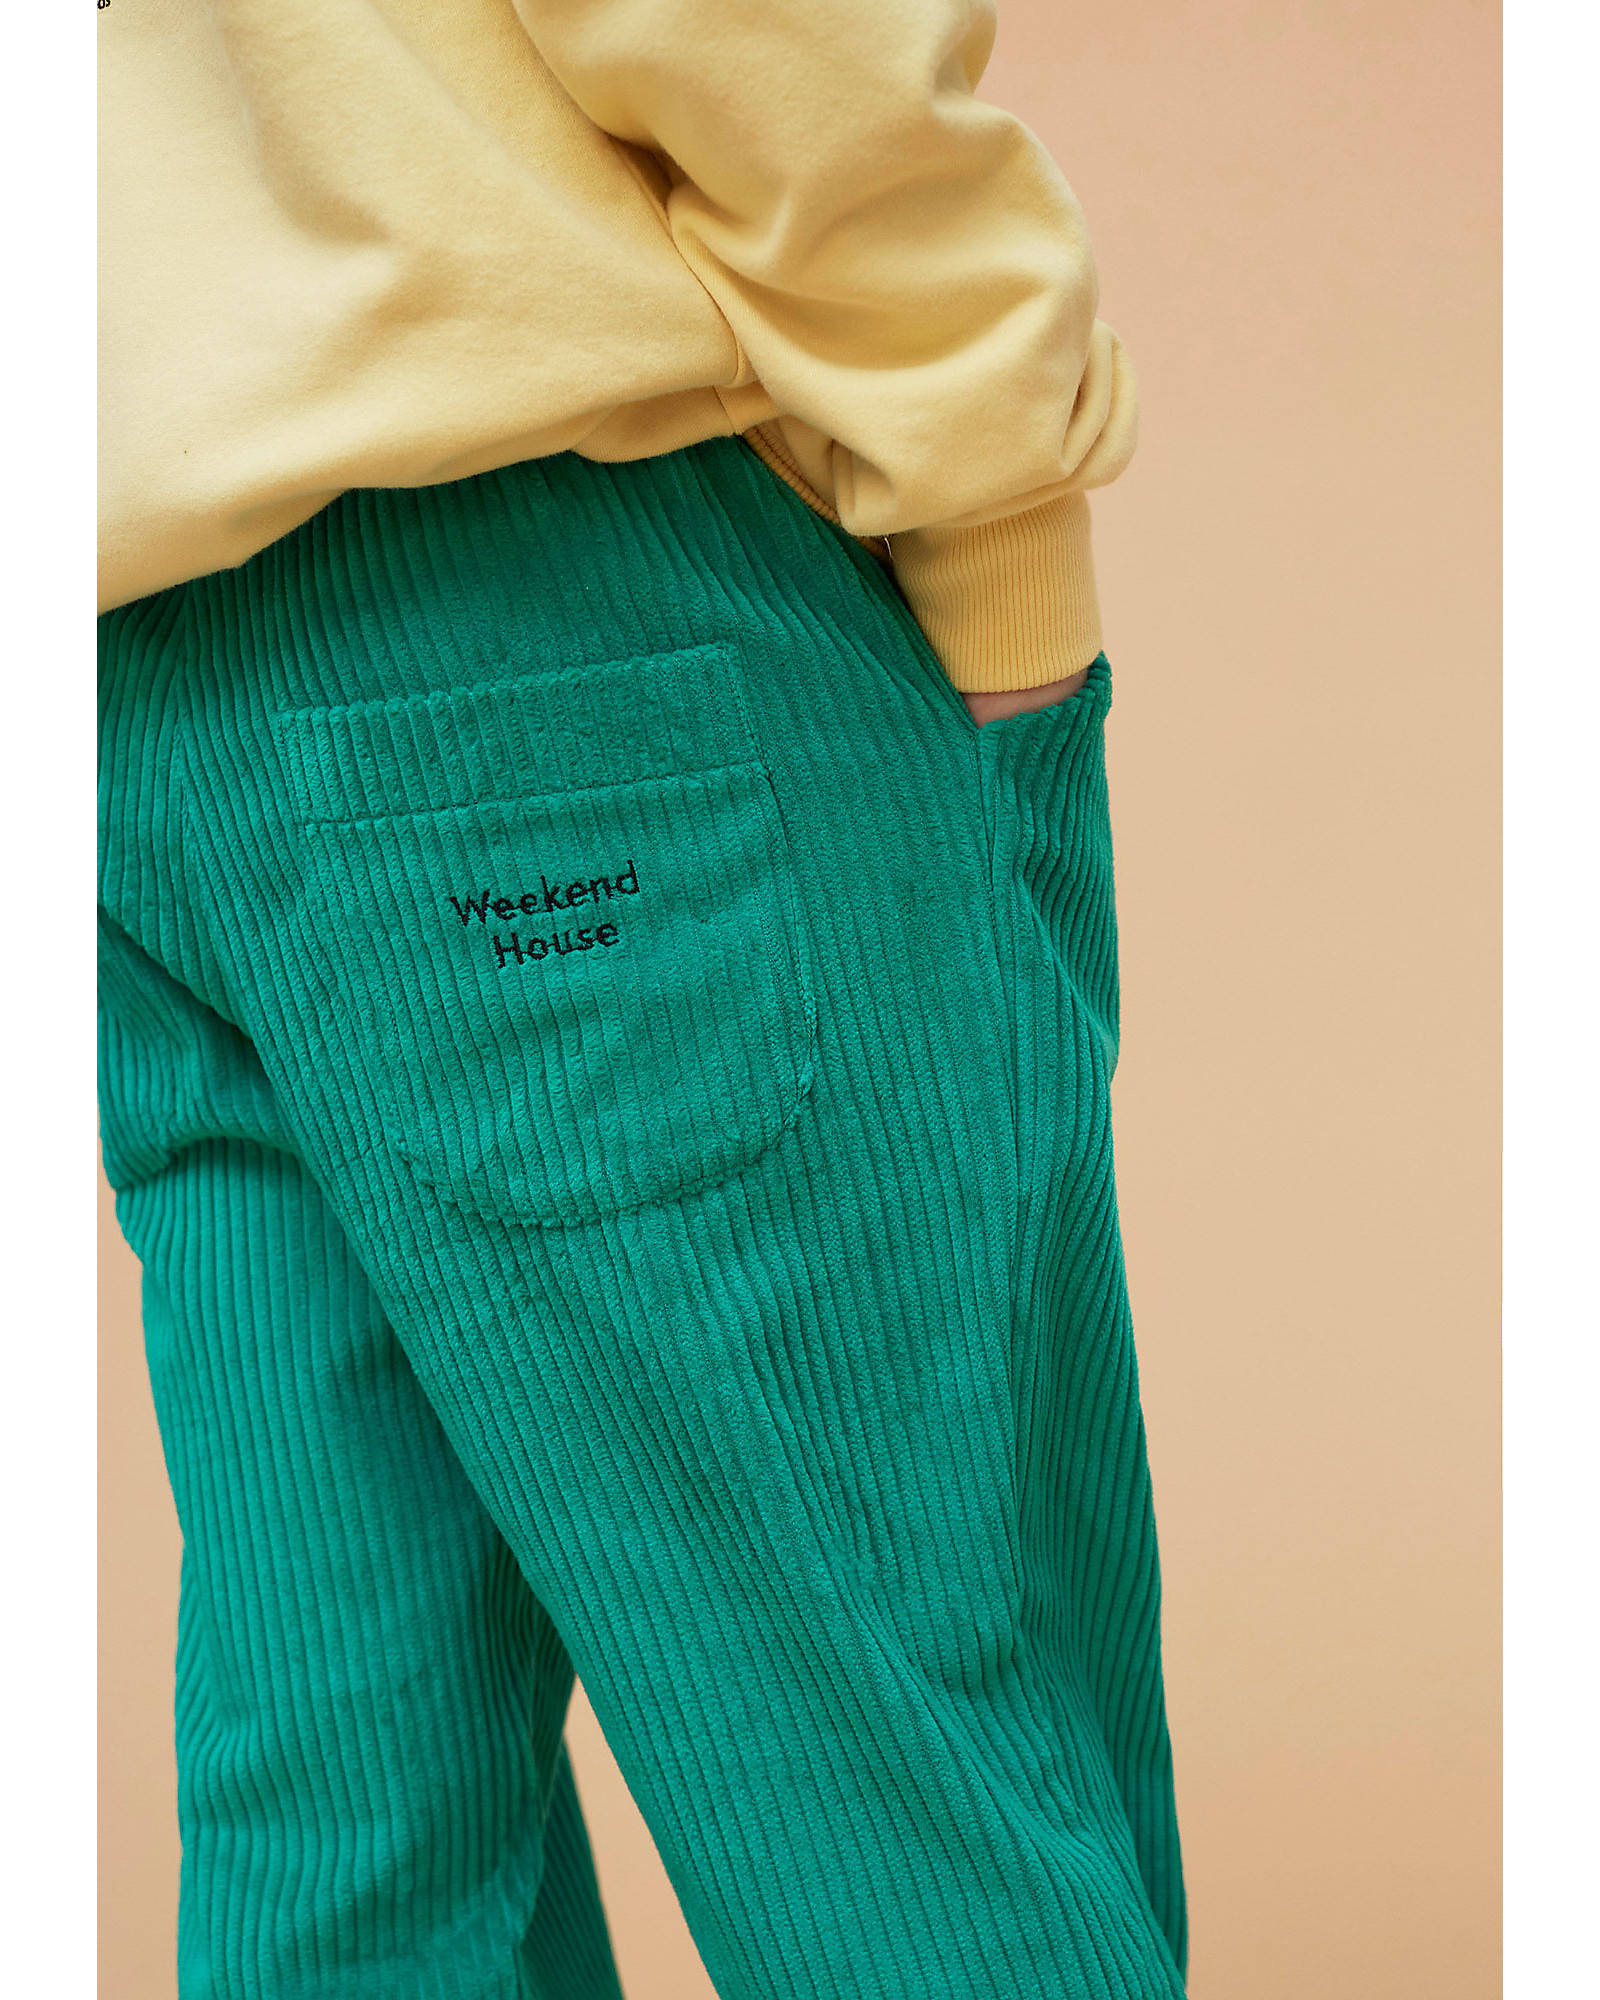 Weekend House Corduroy Pants - Green - 100% Organic Cotton unisex